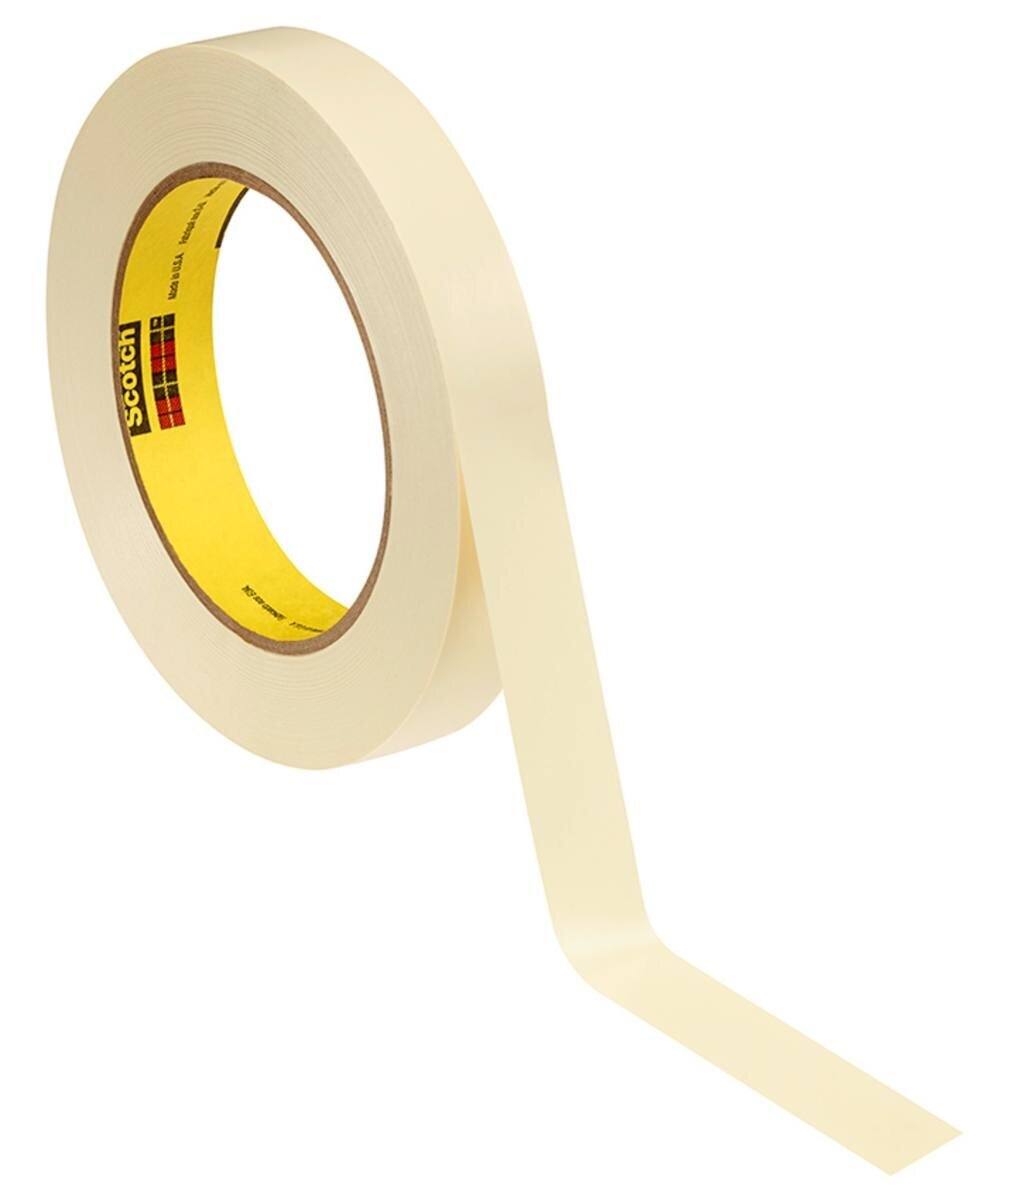 3M Electroplating tape soft PVC 470, yellow, 12.7 mm x 33 m, 0.18 mm